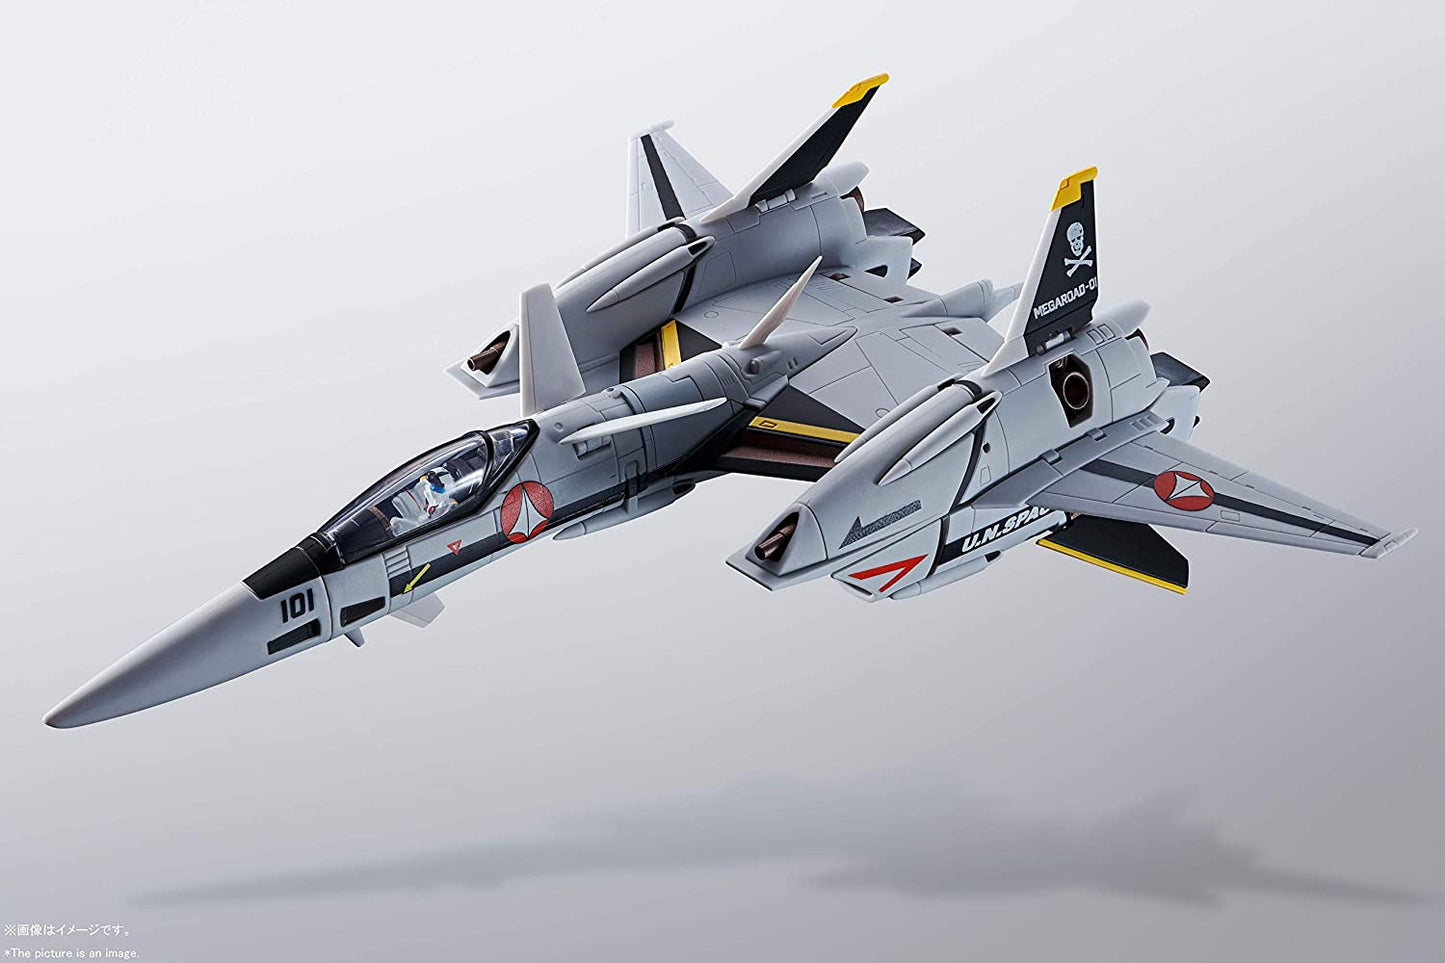 HI-METAL R Super Dimension Fortress Macross VF-4G Lightning III